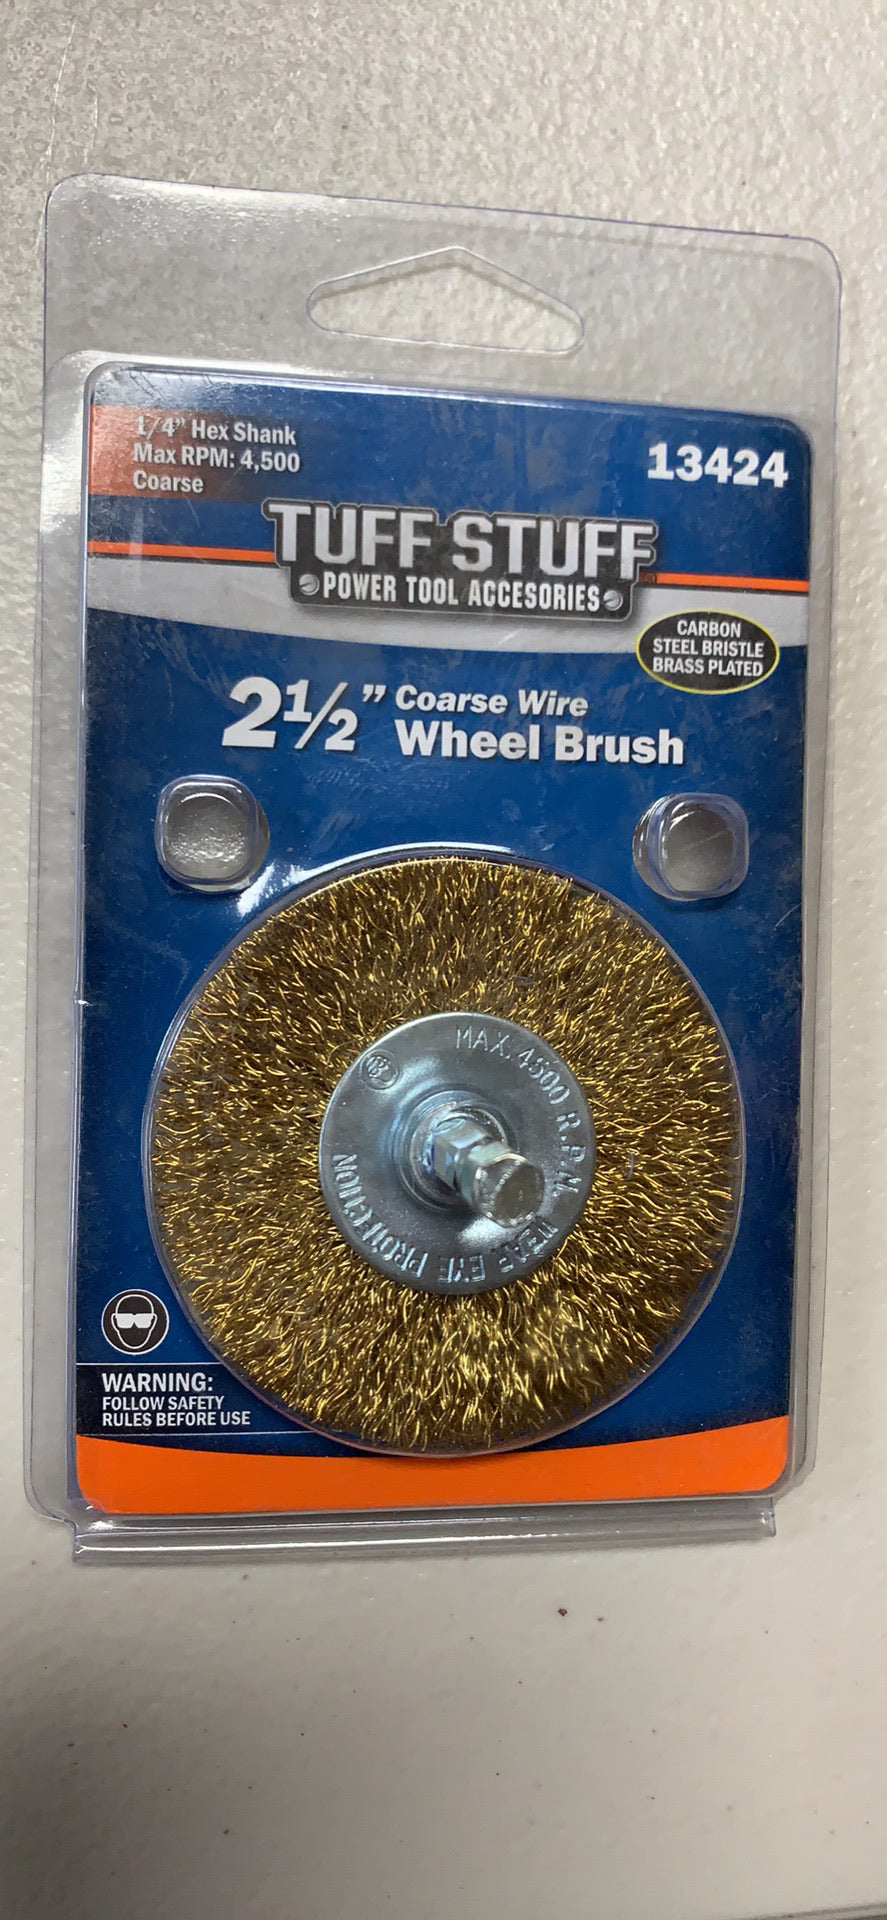 2-1/2” coarse wire wheel brush